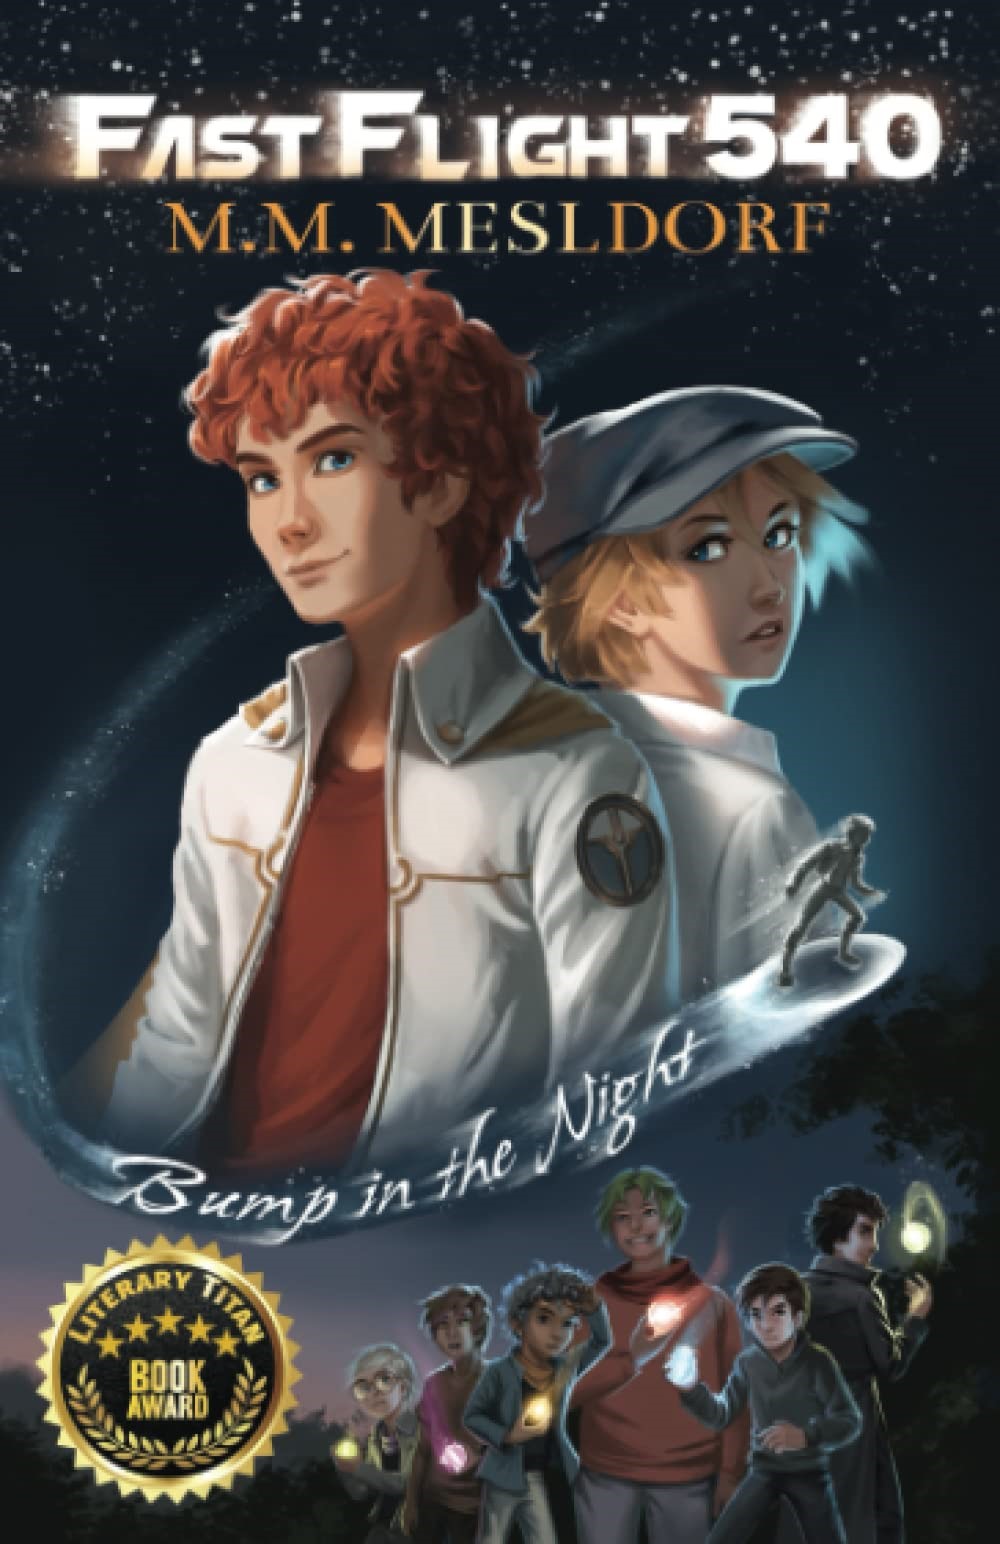 The Award-Winning Fantasy Book ‘FastFlight 540’ is Preparing Kids for Life's Battles